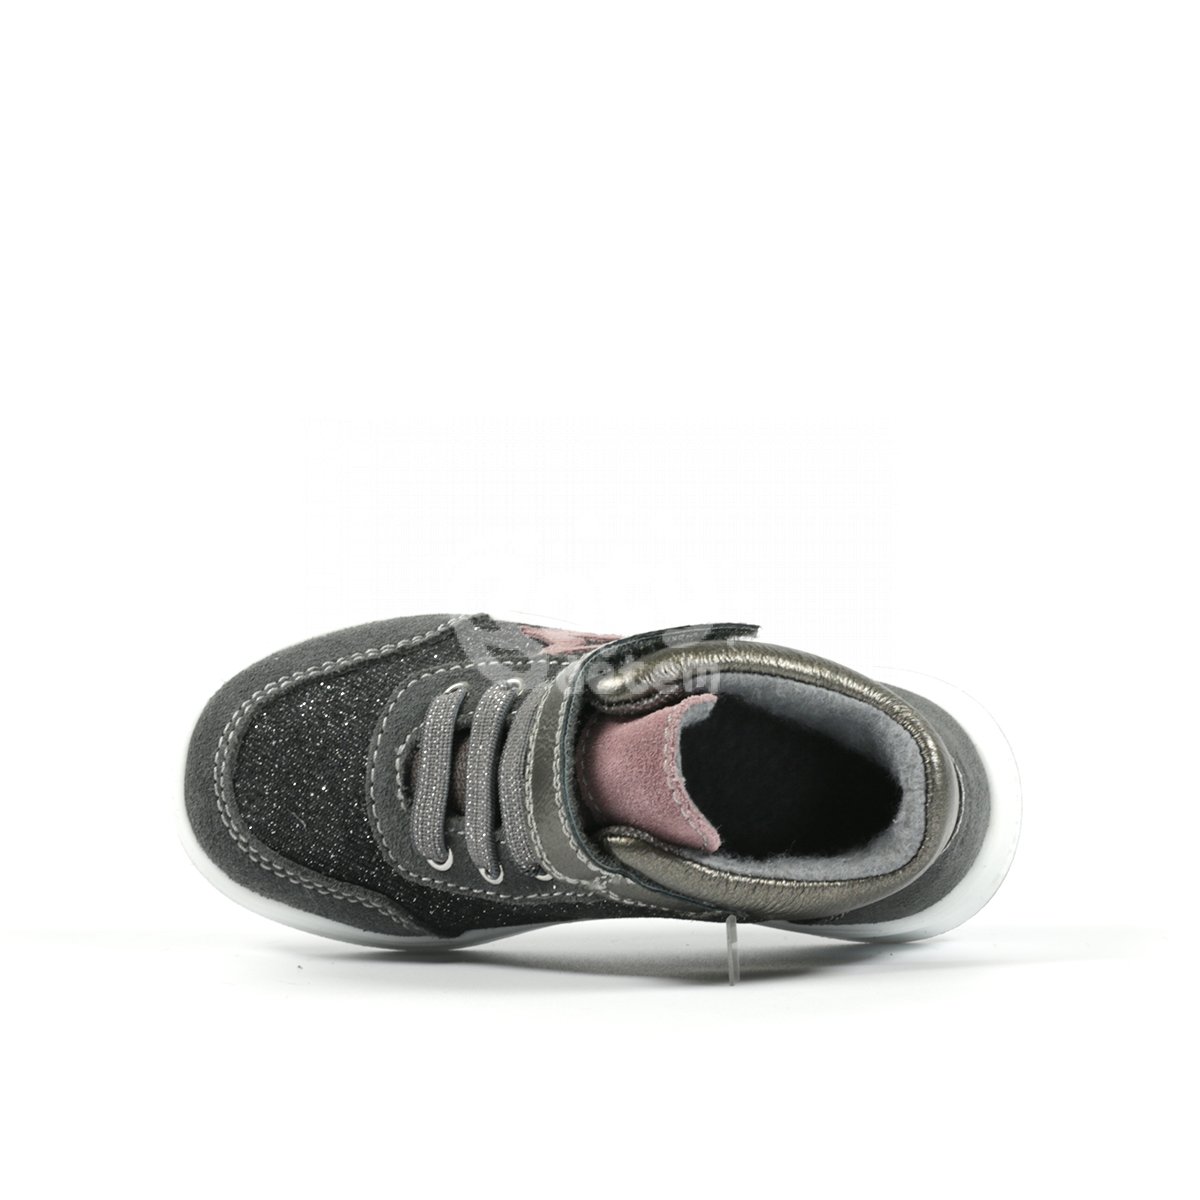 Kožená obuv s membránou Laura Richter 3607-4111-6301 šedá